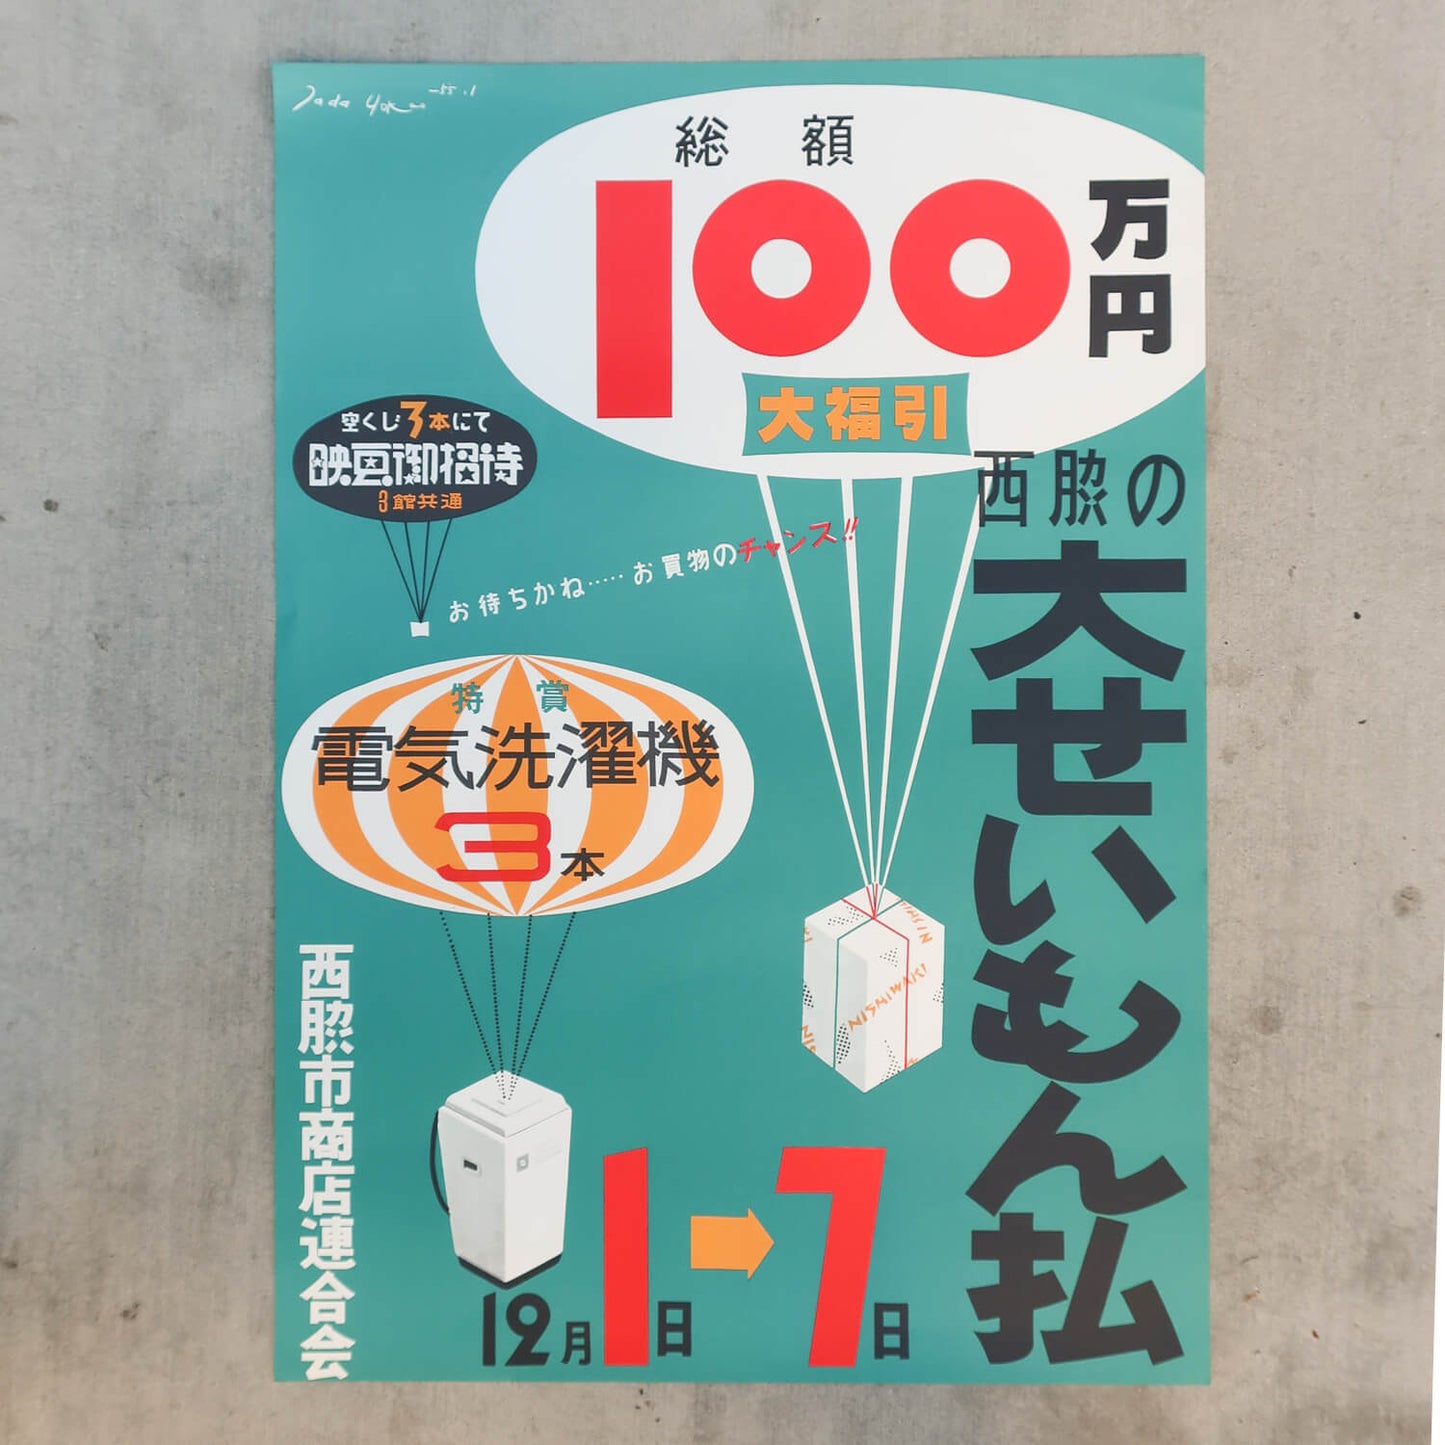 Nishiwaki Bargain Sale 1955 Poster (Reprint) by Tadanori Yokoo